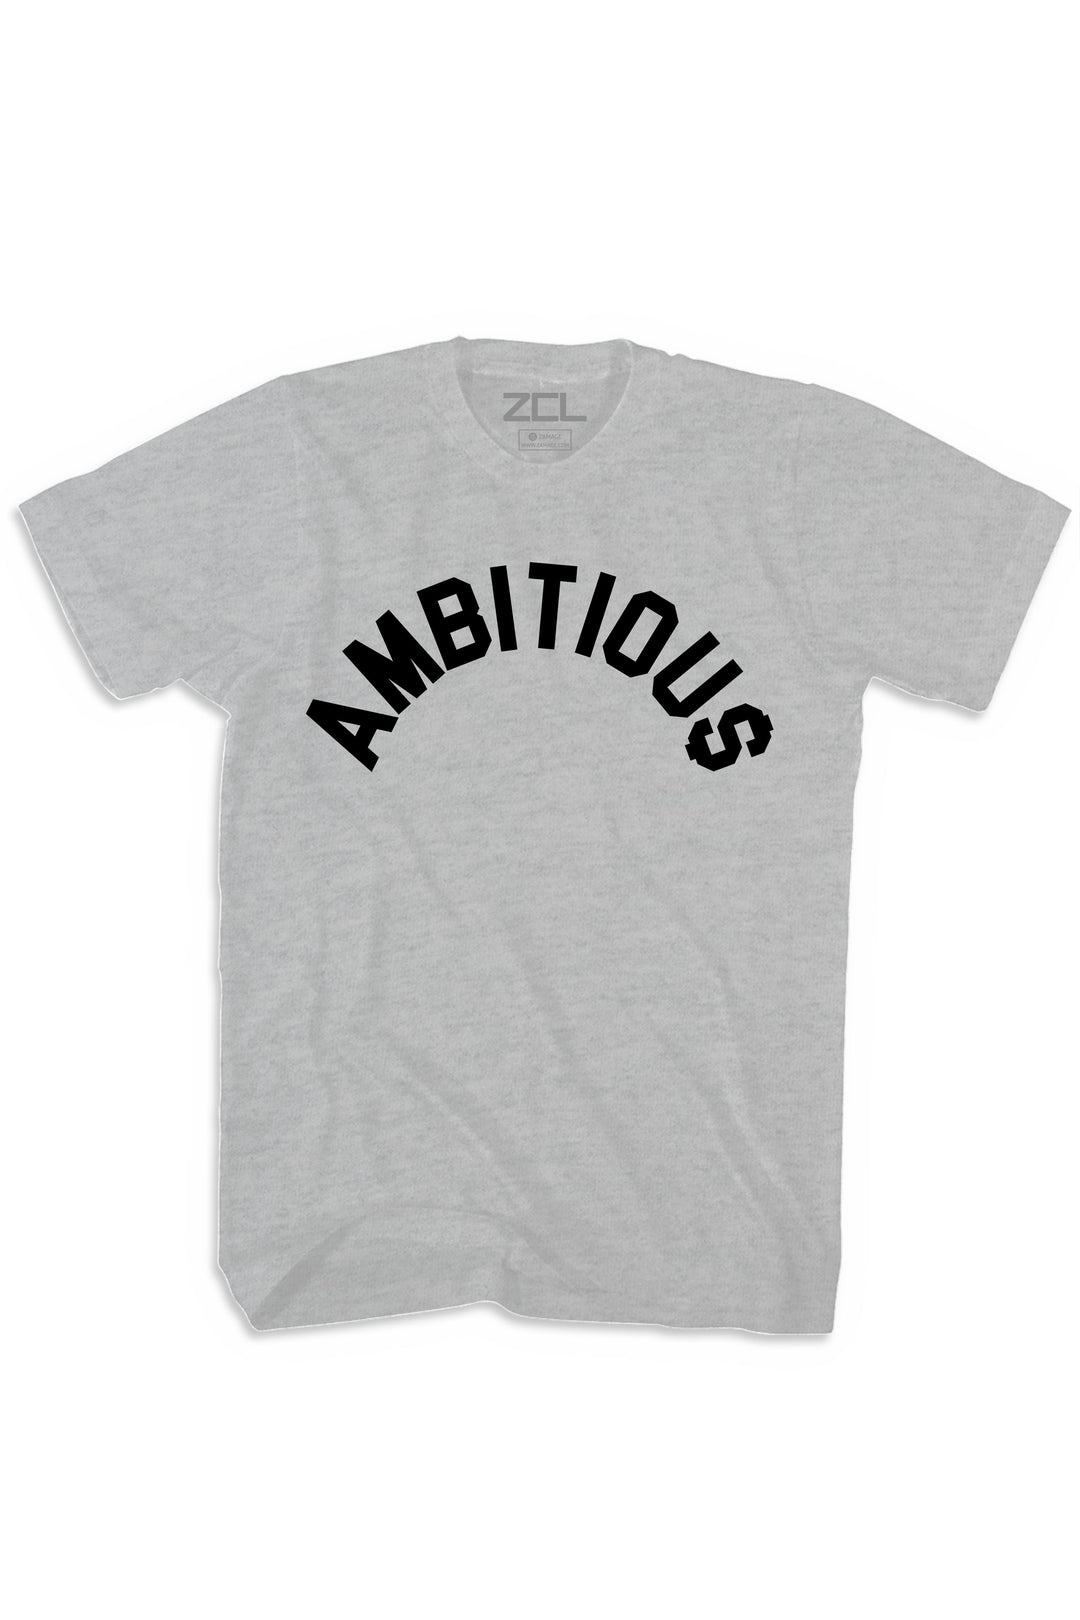 Ambitious Tee (Black Logo) - Zamage